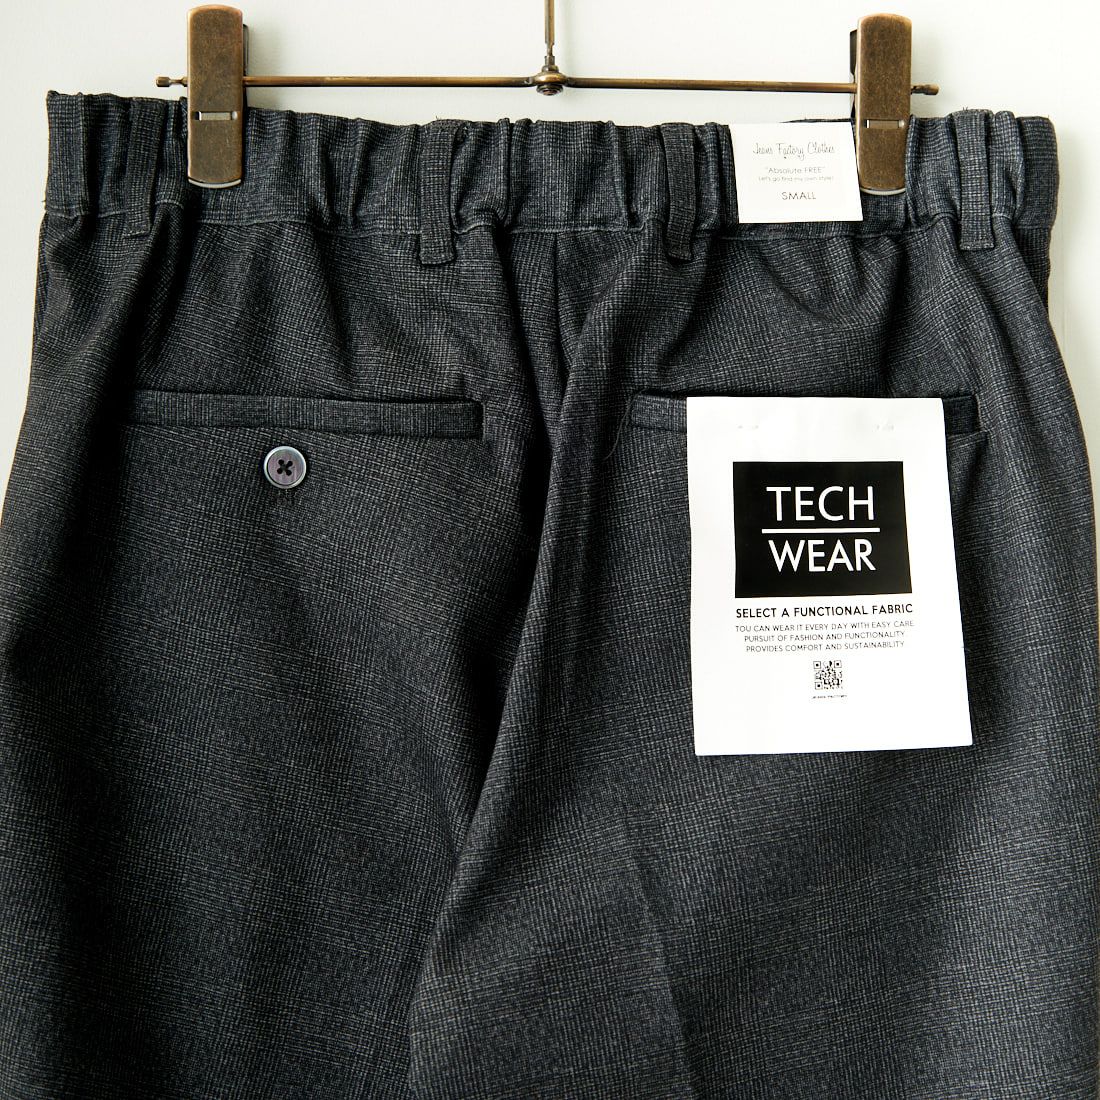 Jeans Factory Clothes [ジーンズファクトリークローズ] テックポンチ 1Pイージースラックス [JFC-242-017] 4 GRYｸﾞﾚﾝﾁ